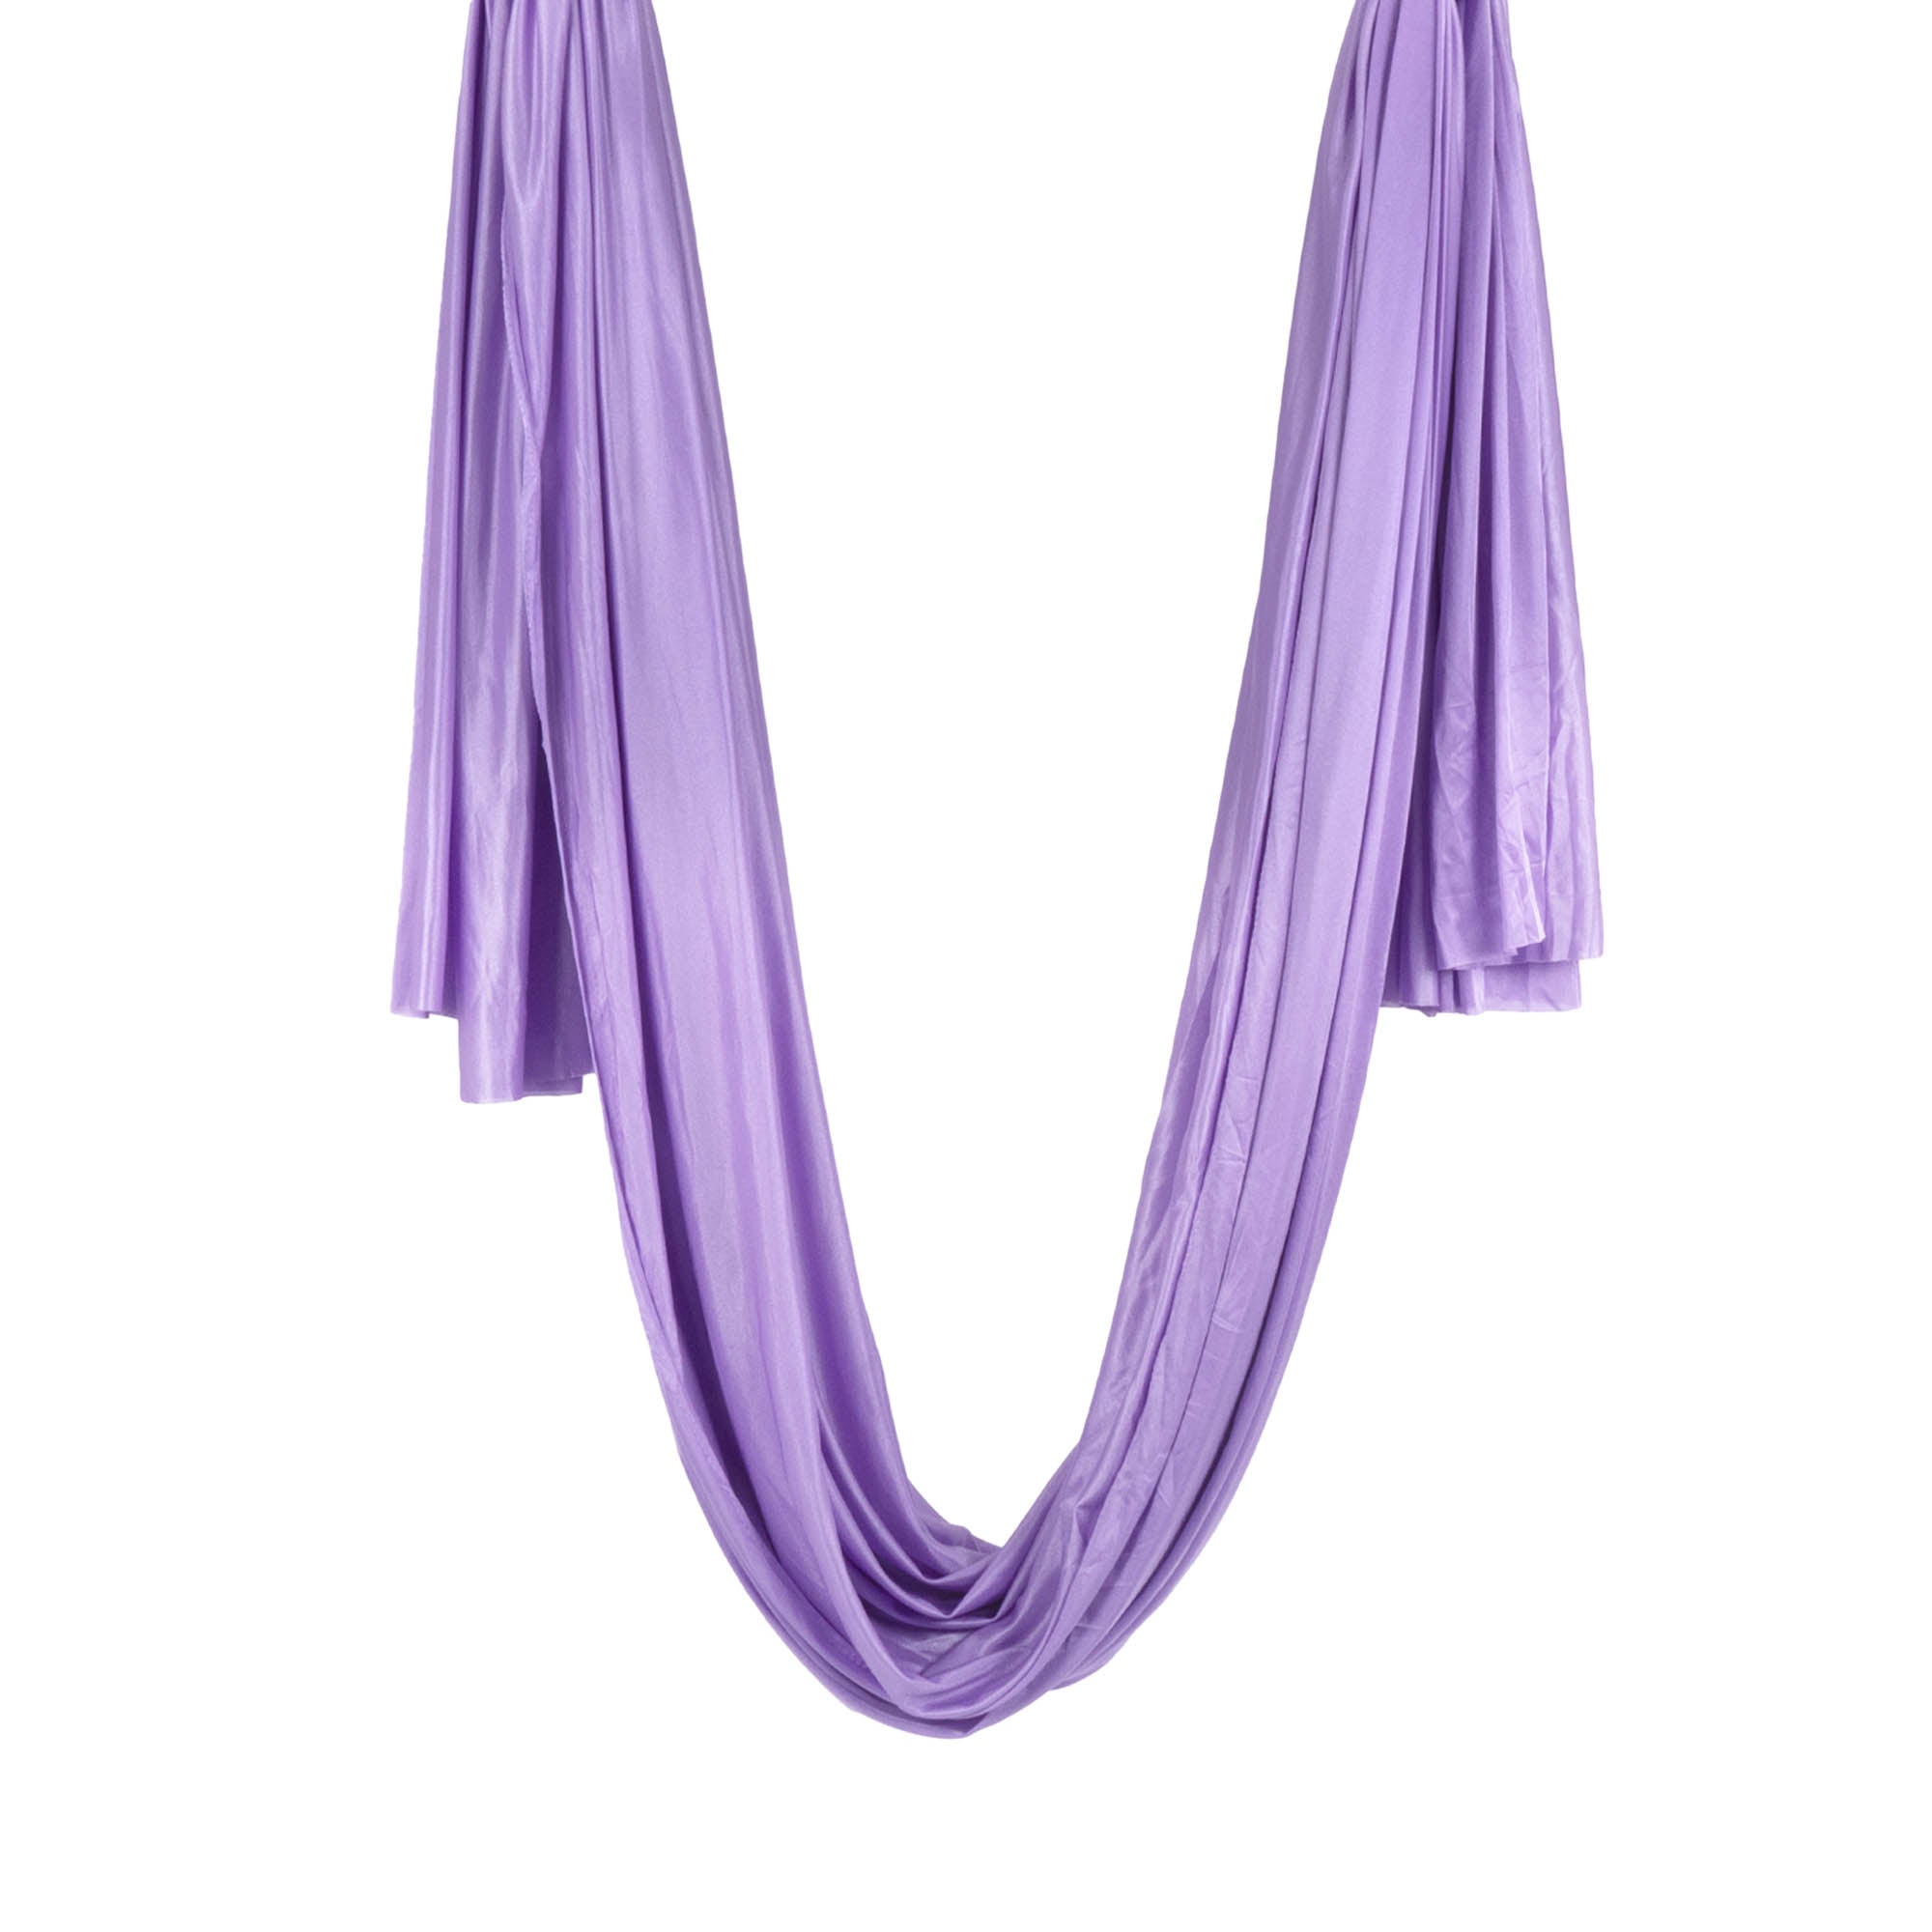 Lavender yoga hammock rigged